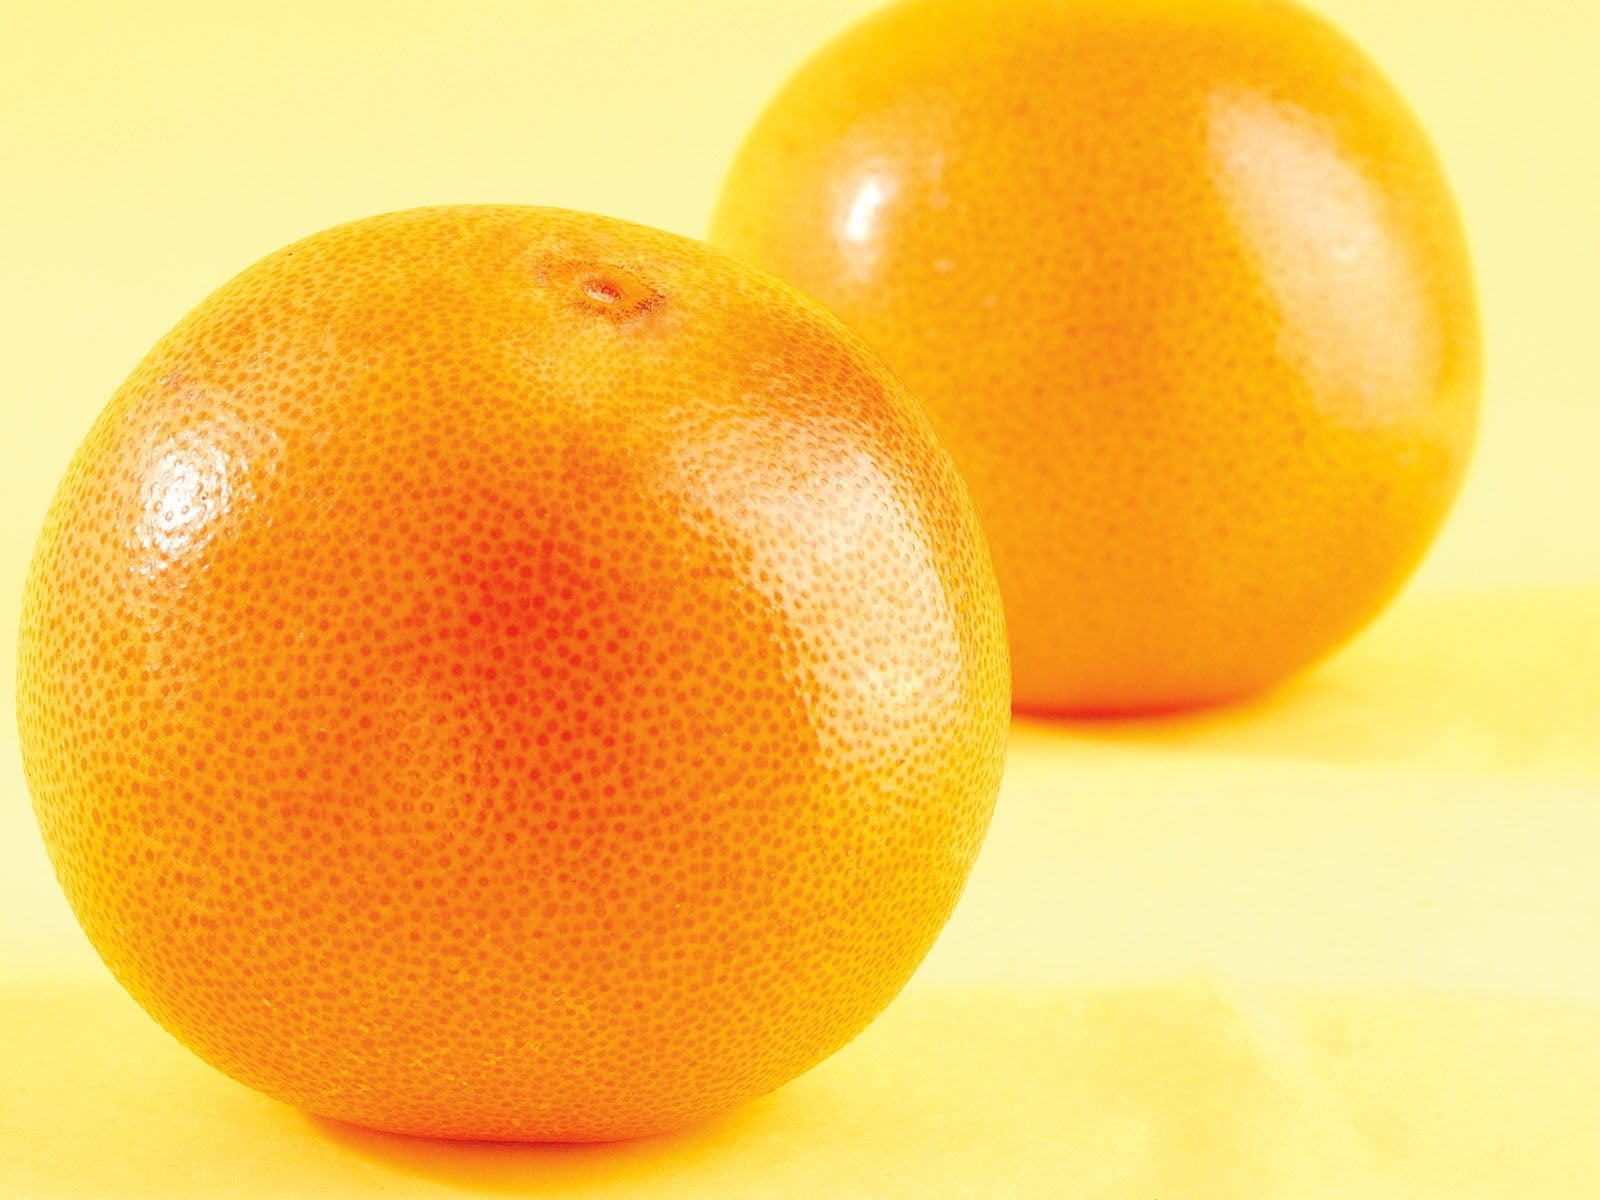 two round orange fruits